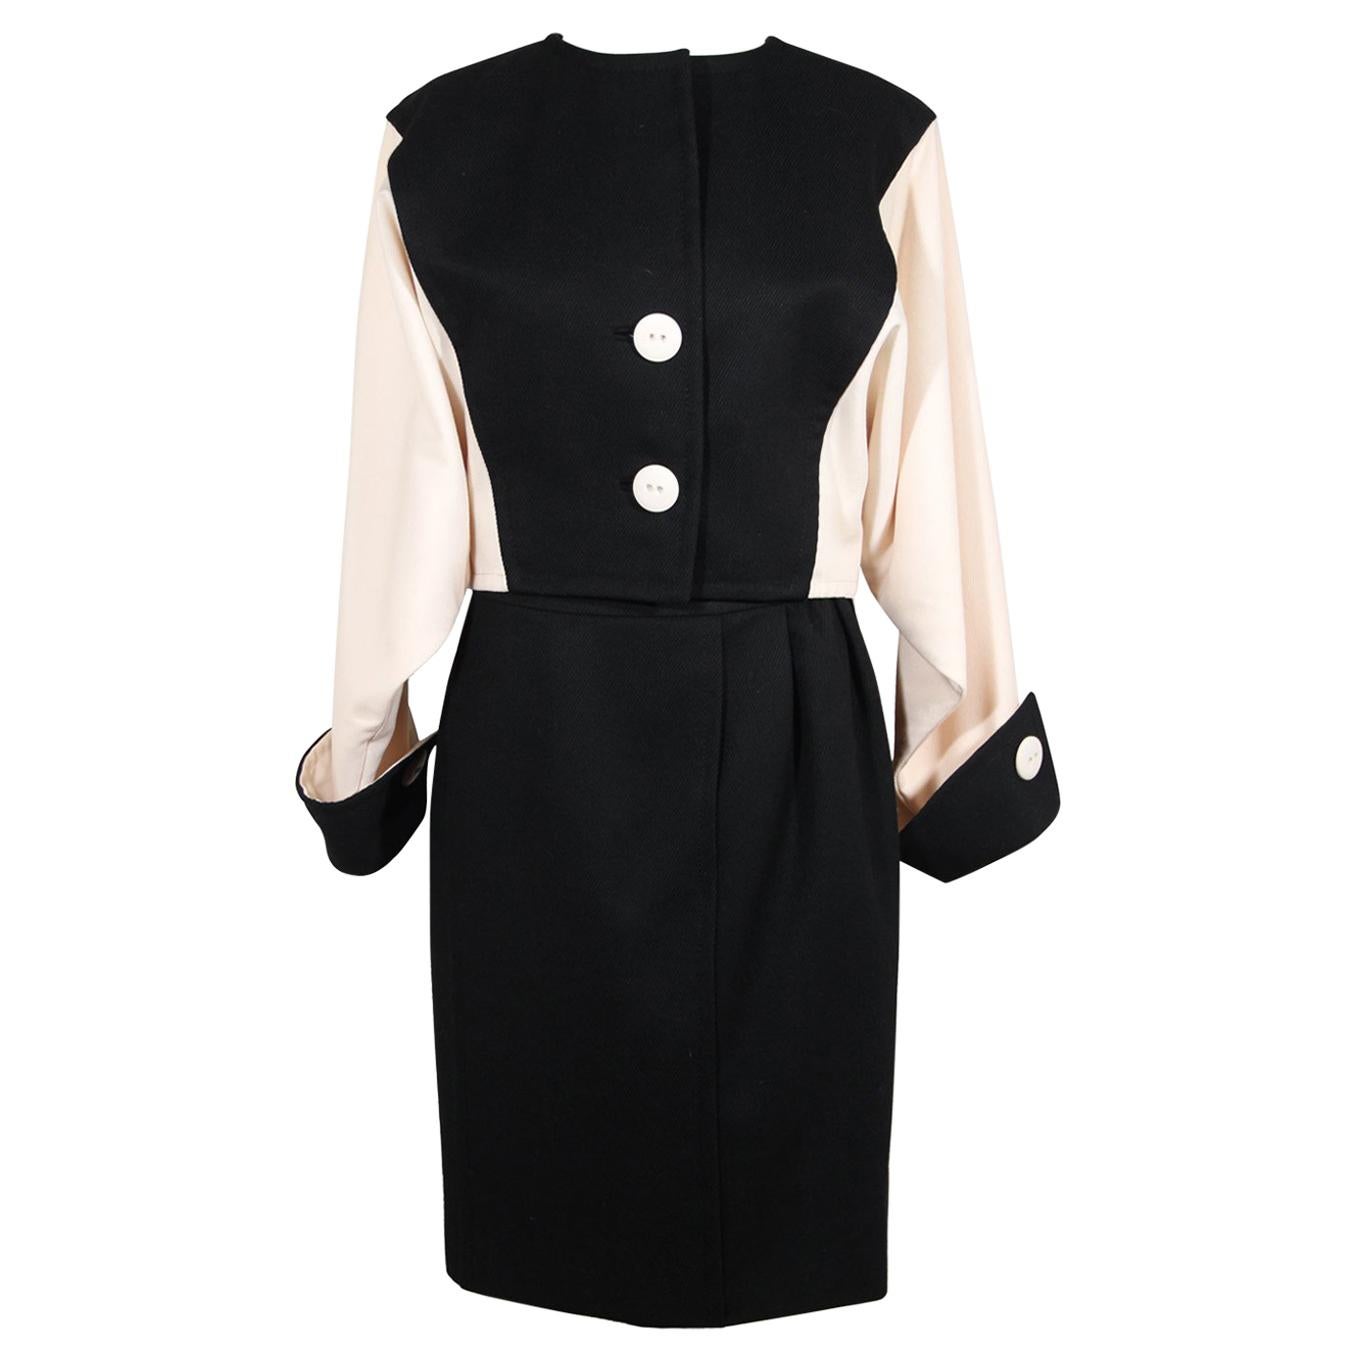 Andrea Odicini Vintage Suit Black White Jacket and Skirt Set Size 44